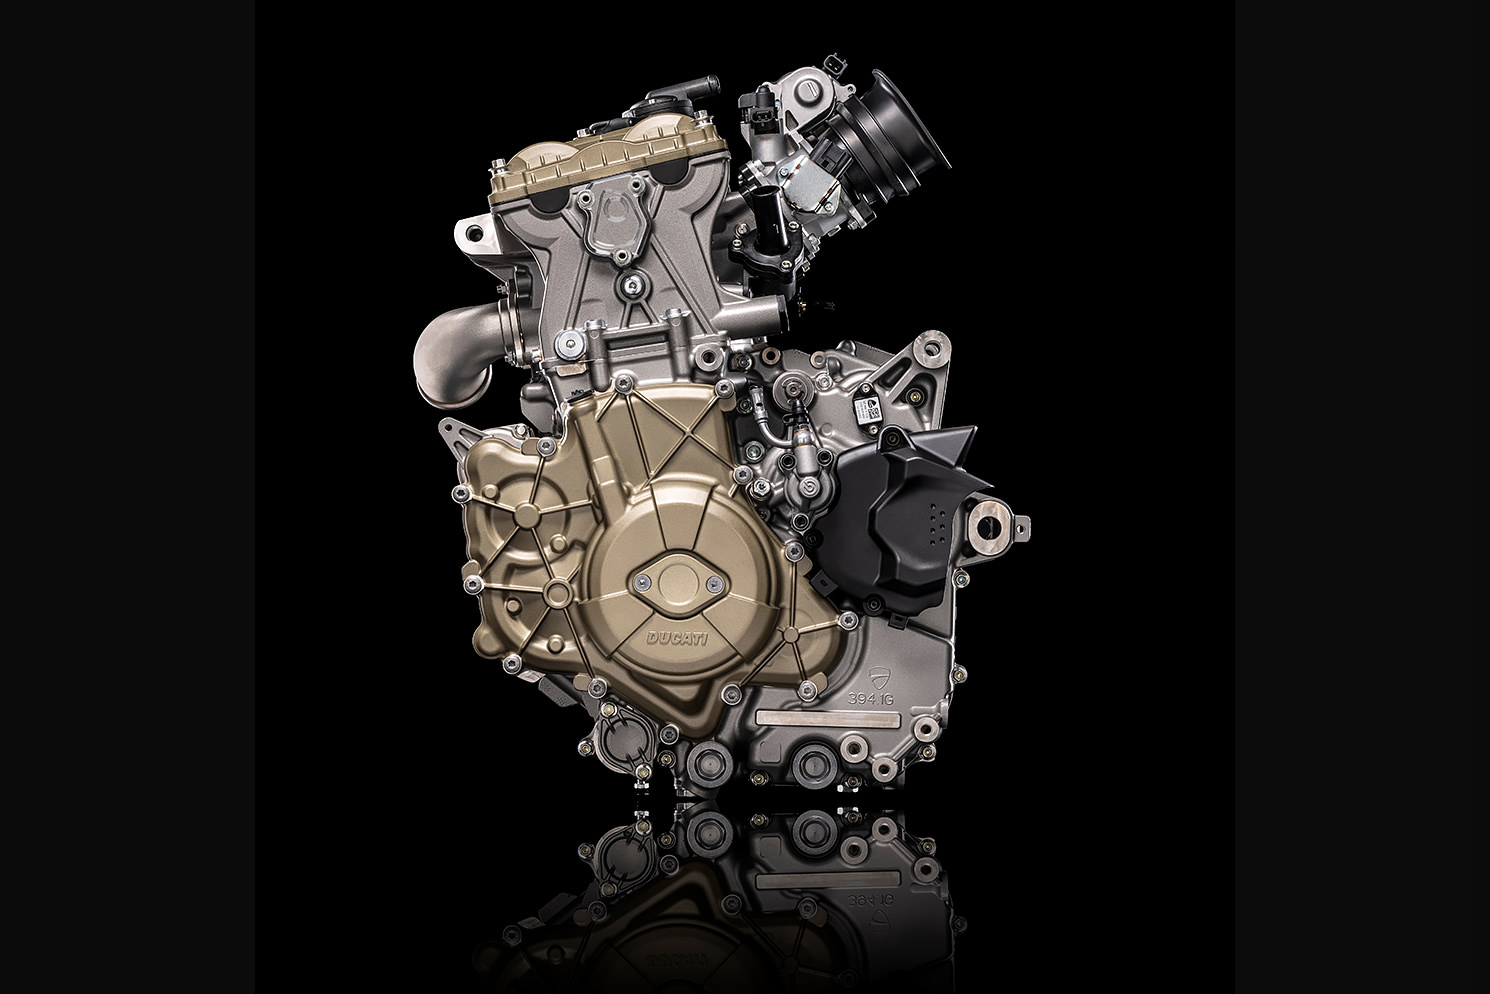 Speed Read: The new Ducati Superquadro Mono engine and more